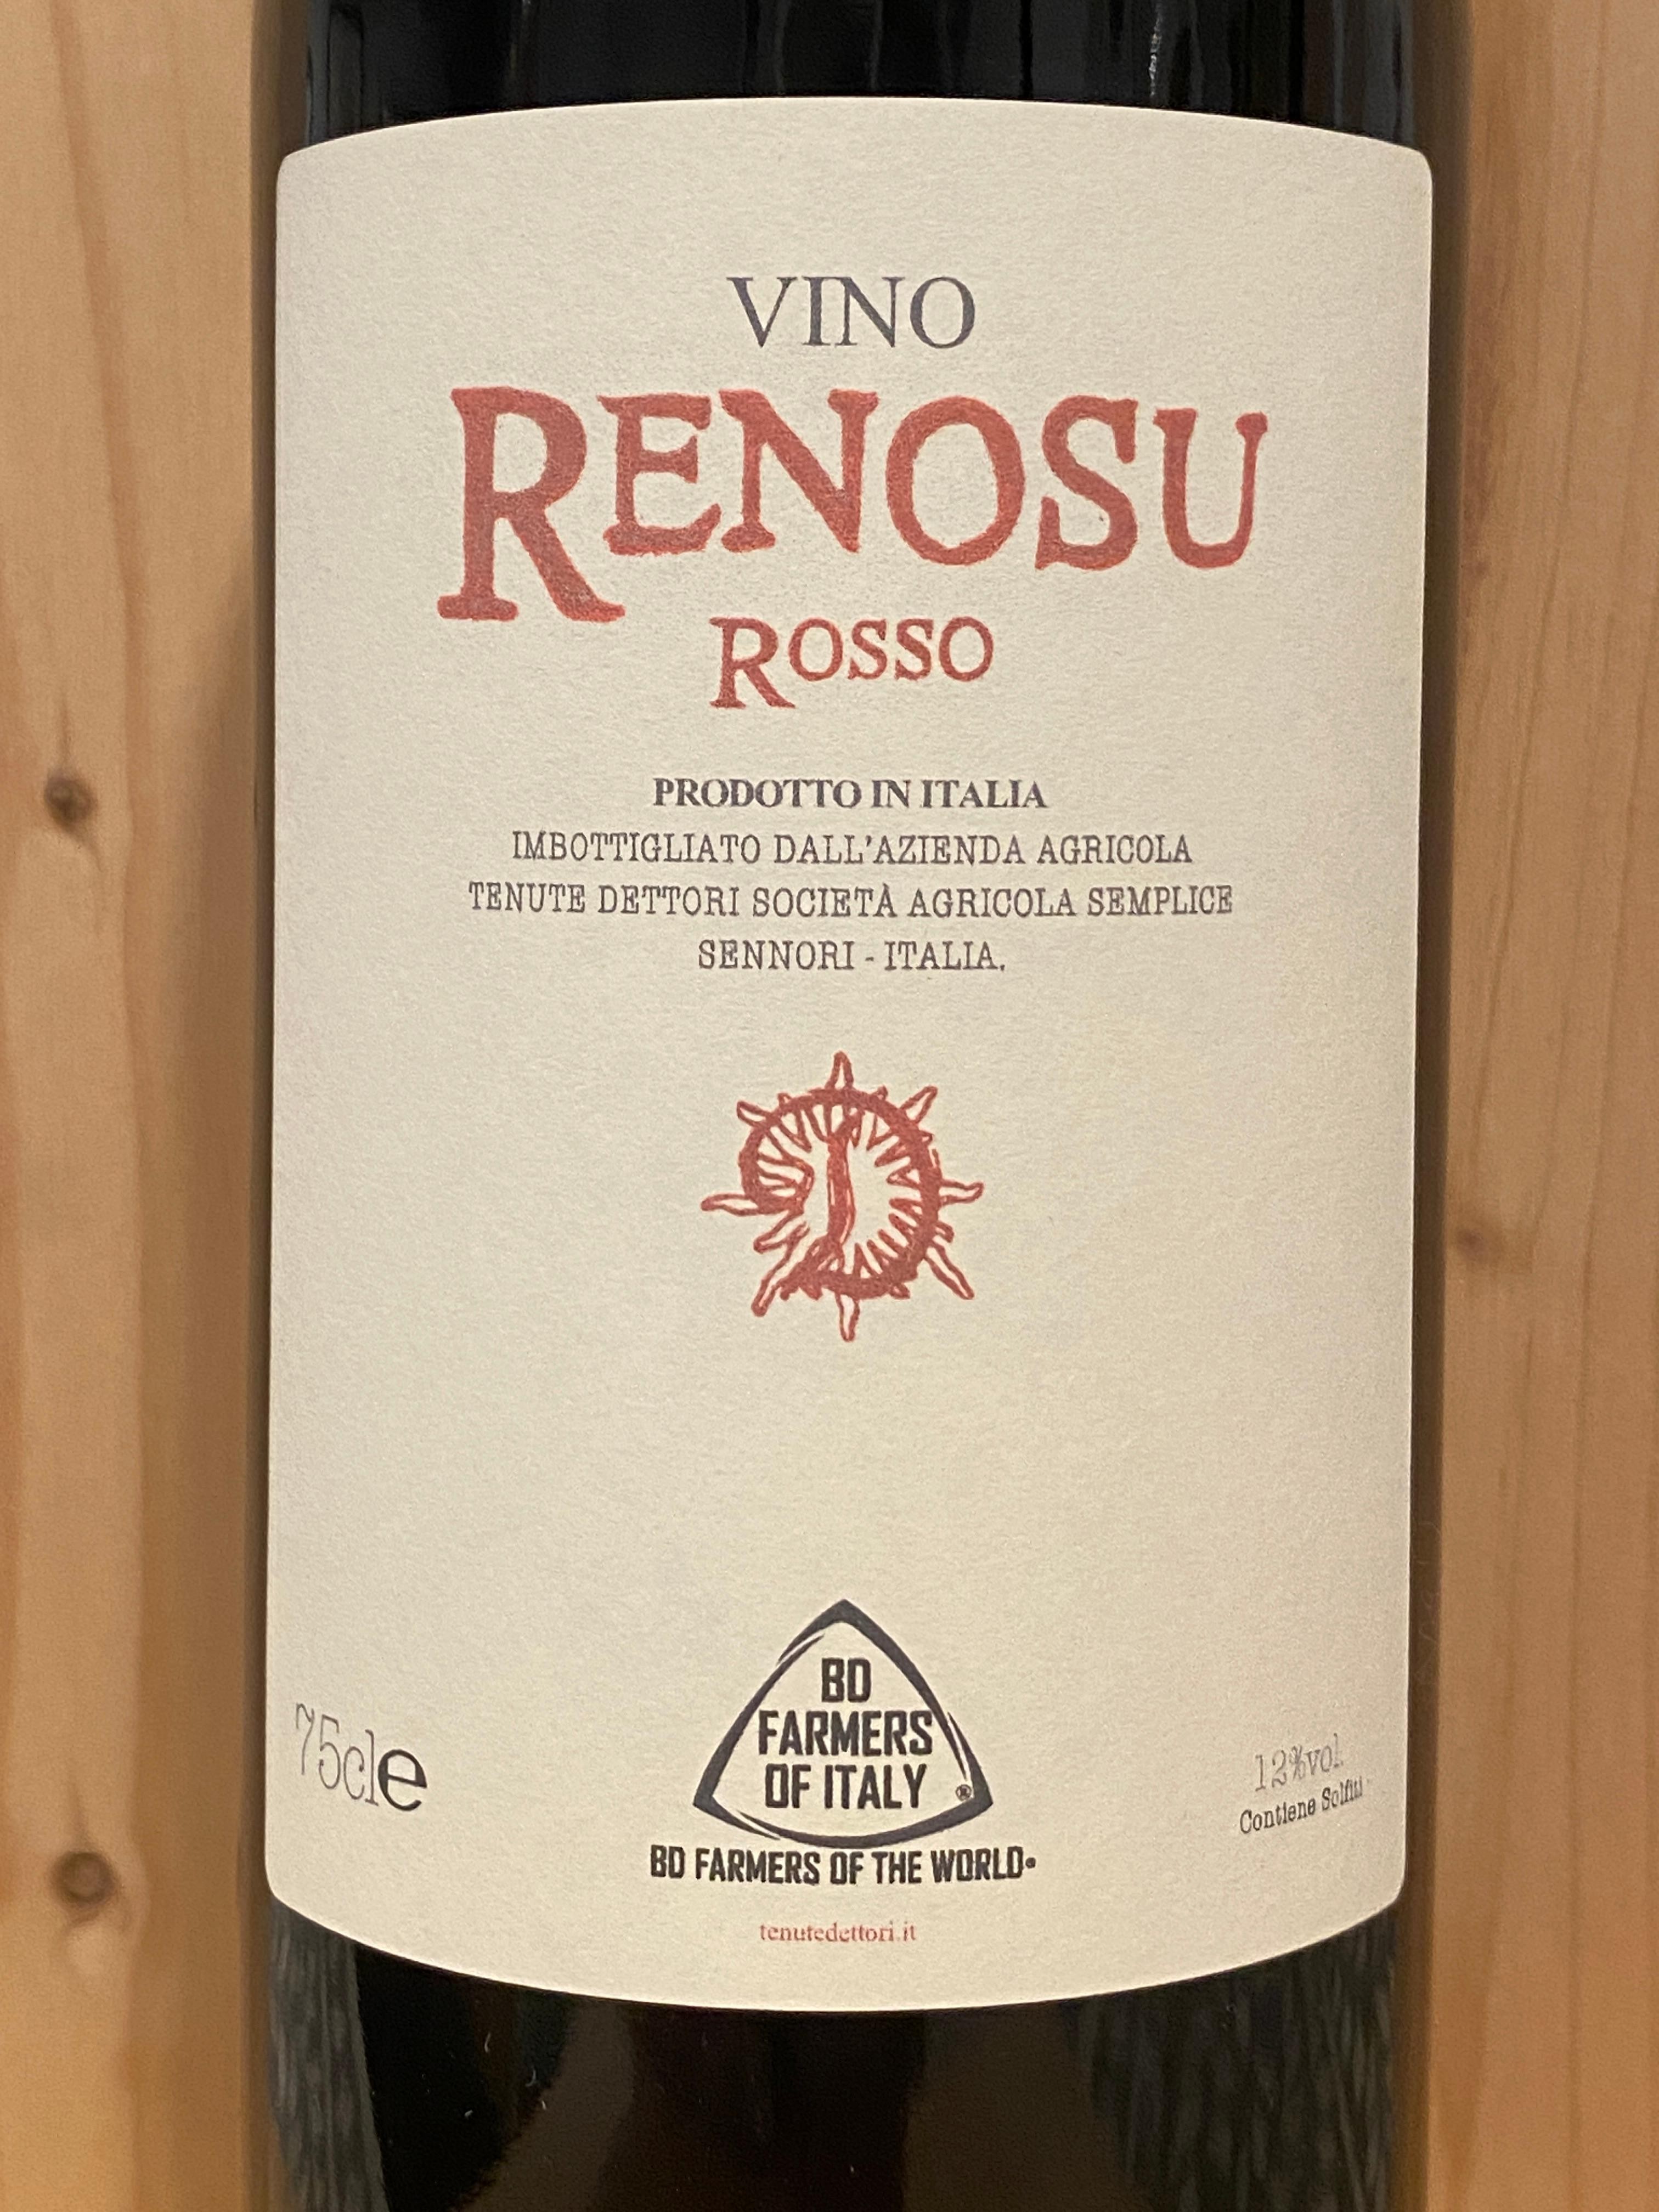 Tenuta Dettori "Renosu" Rosso NV: Sardinia, Italy